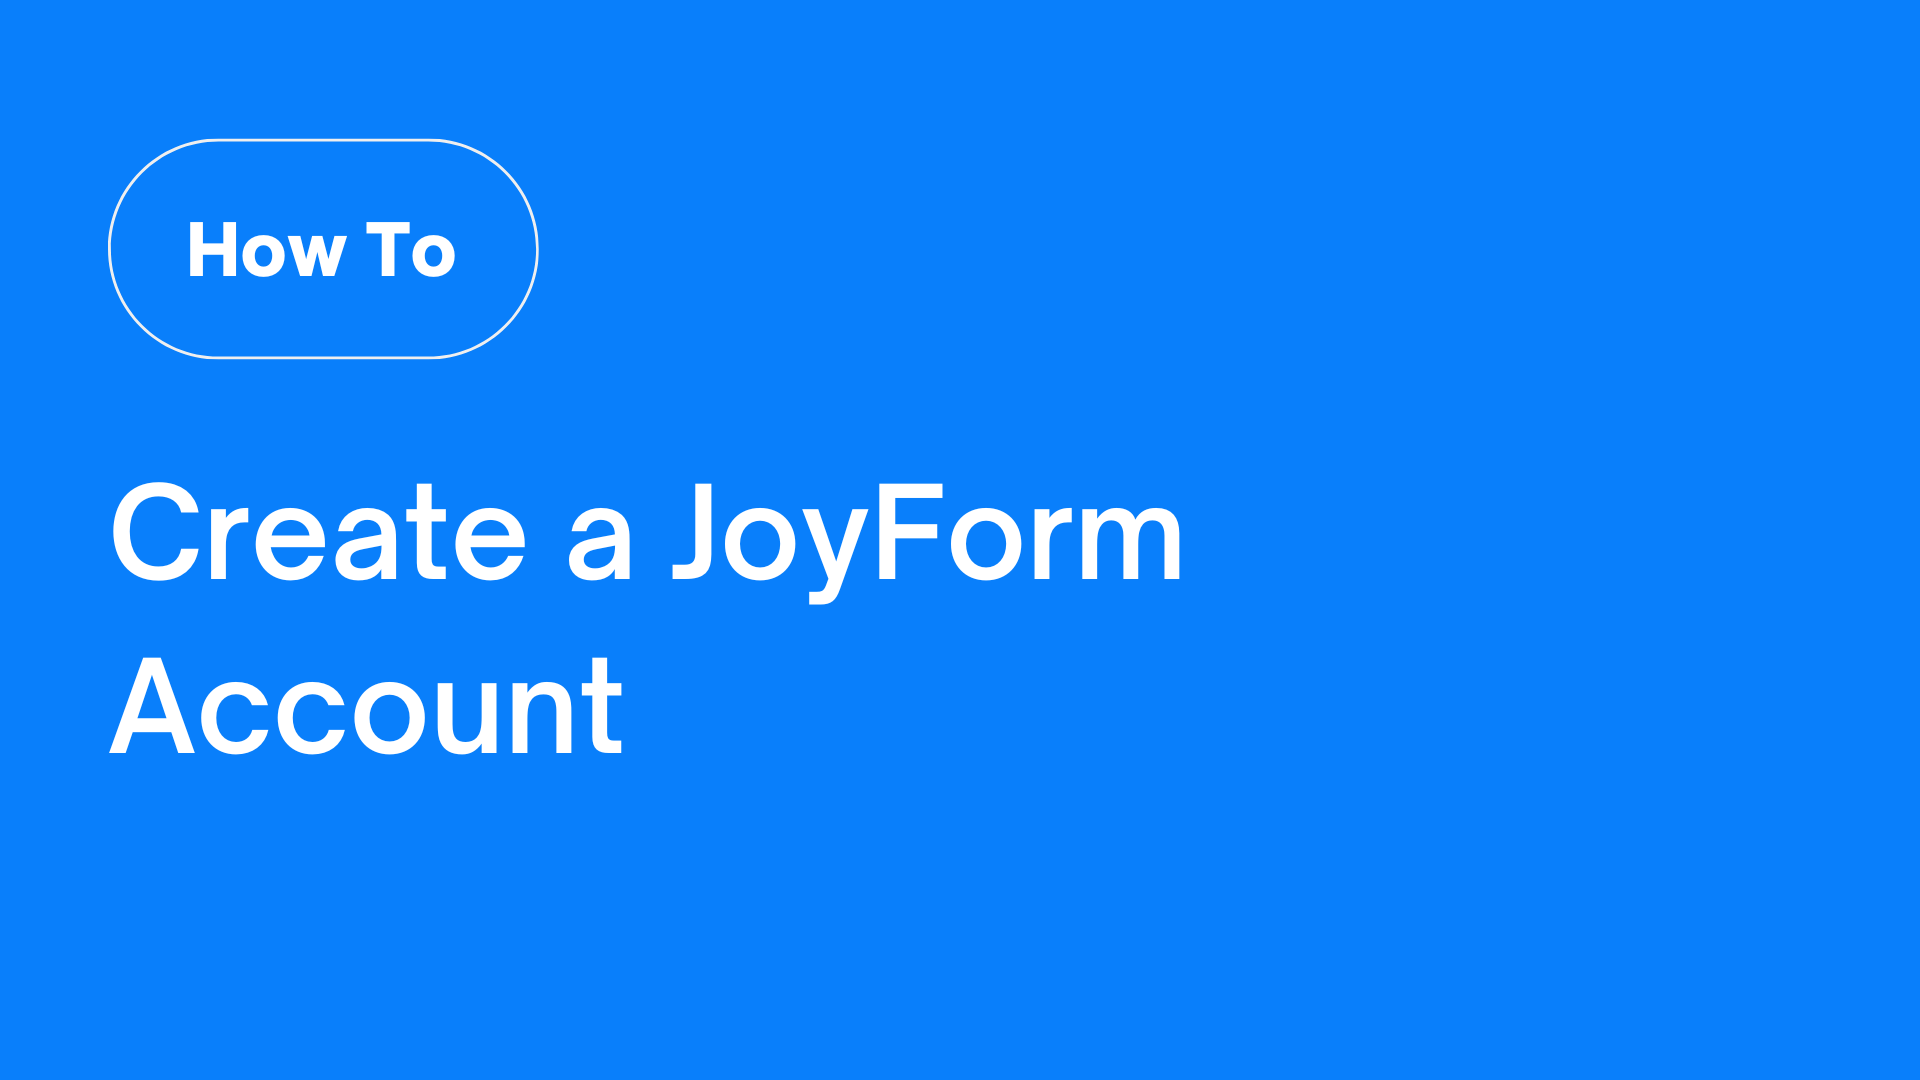 [How To] Create a JoyForm Account